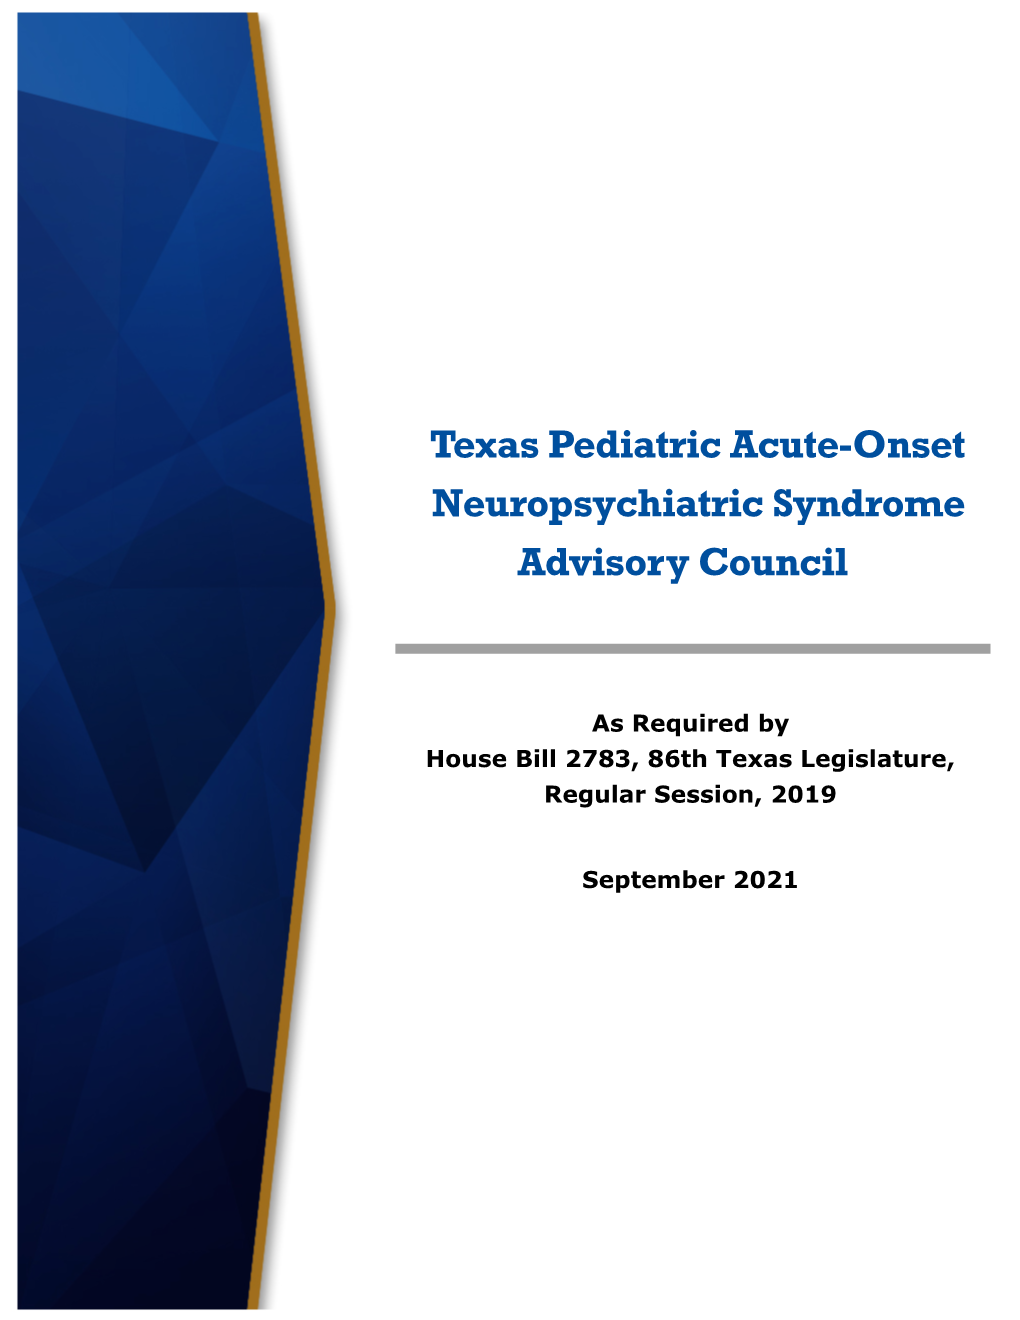 Texas Pediatric Acute-Onset Neuropsychiatric Syndrome Advisory Council